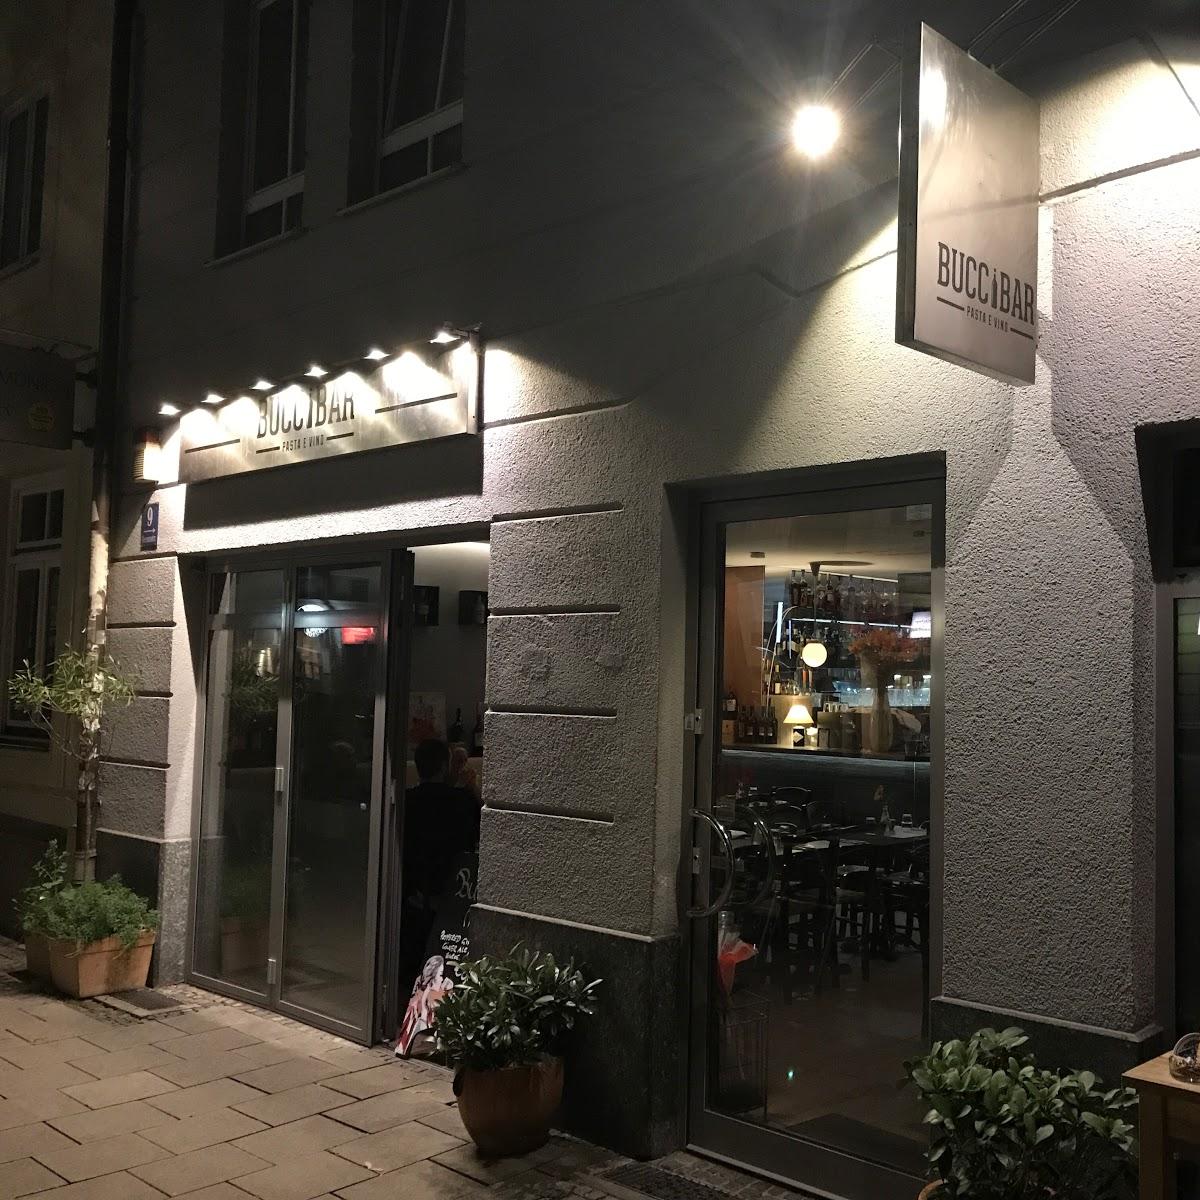 Restaurant "Bucci Bar" in München